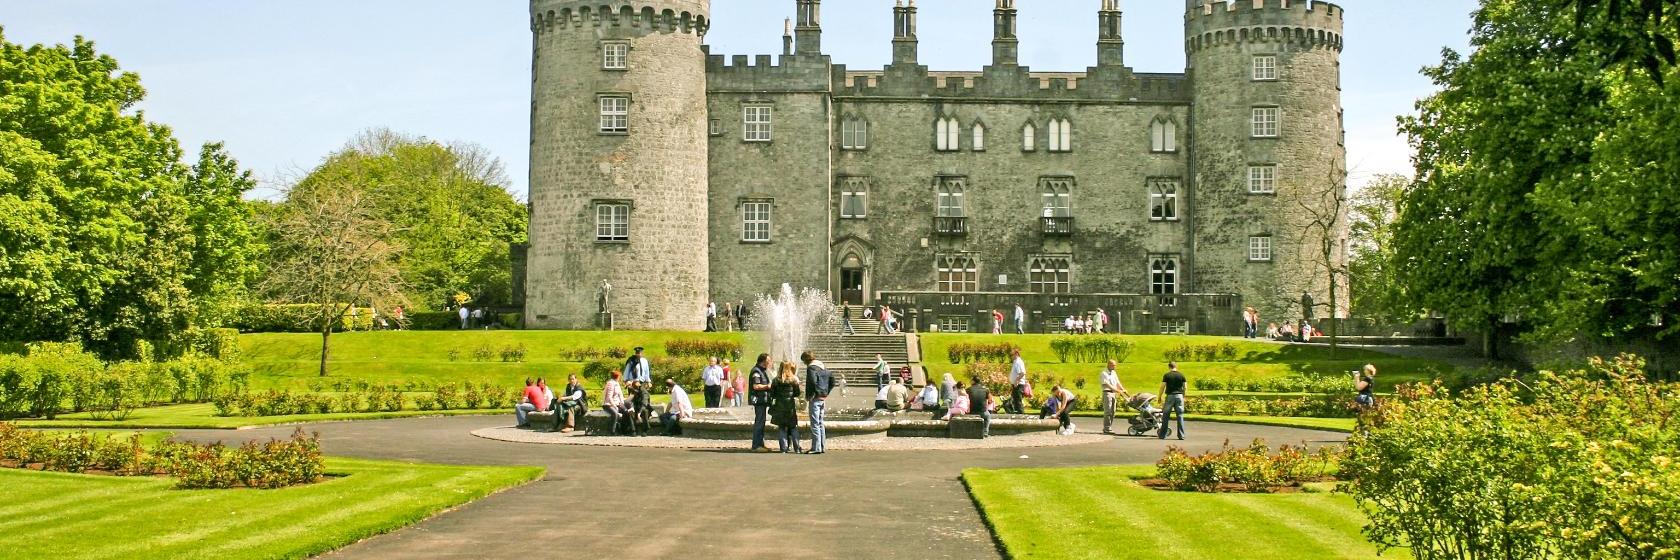 Kilkenny dating site - free online dating in Kilkenny (Ireland)